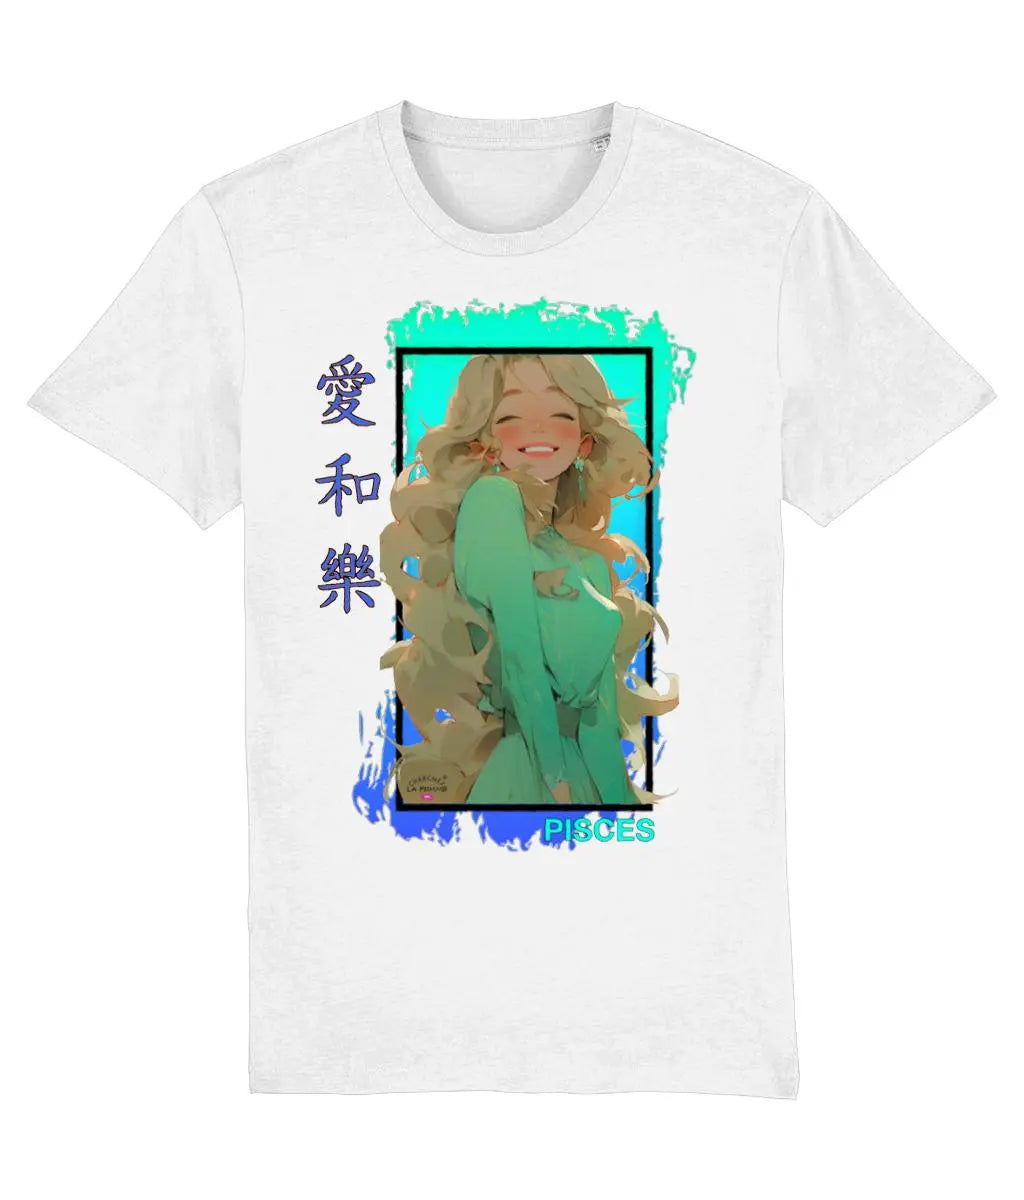 Pisces Anime Inspired Organic T-Shirt Cherchez La Femme brand